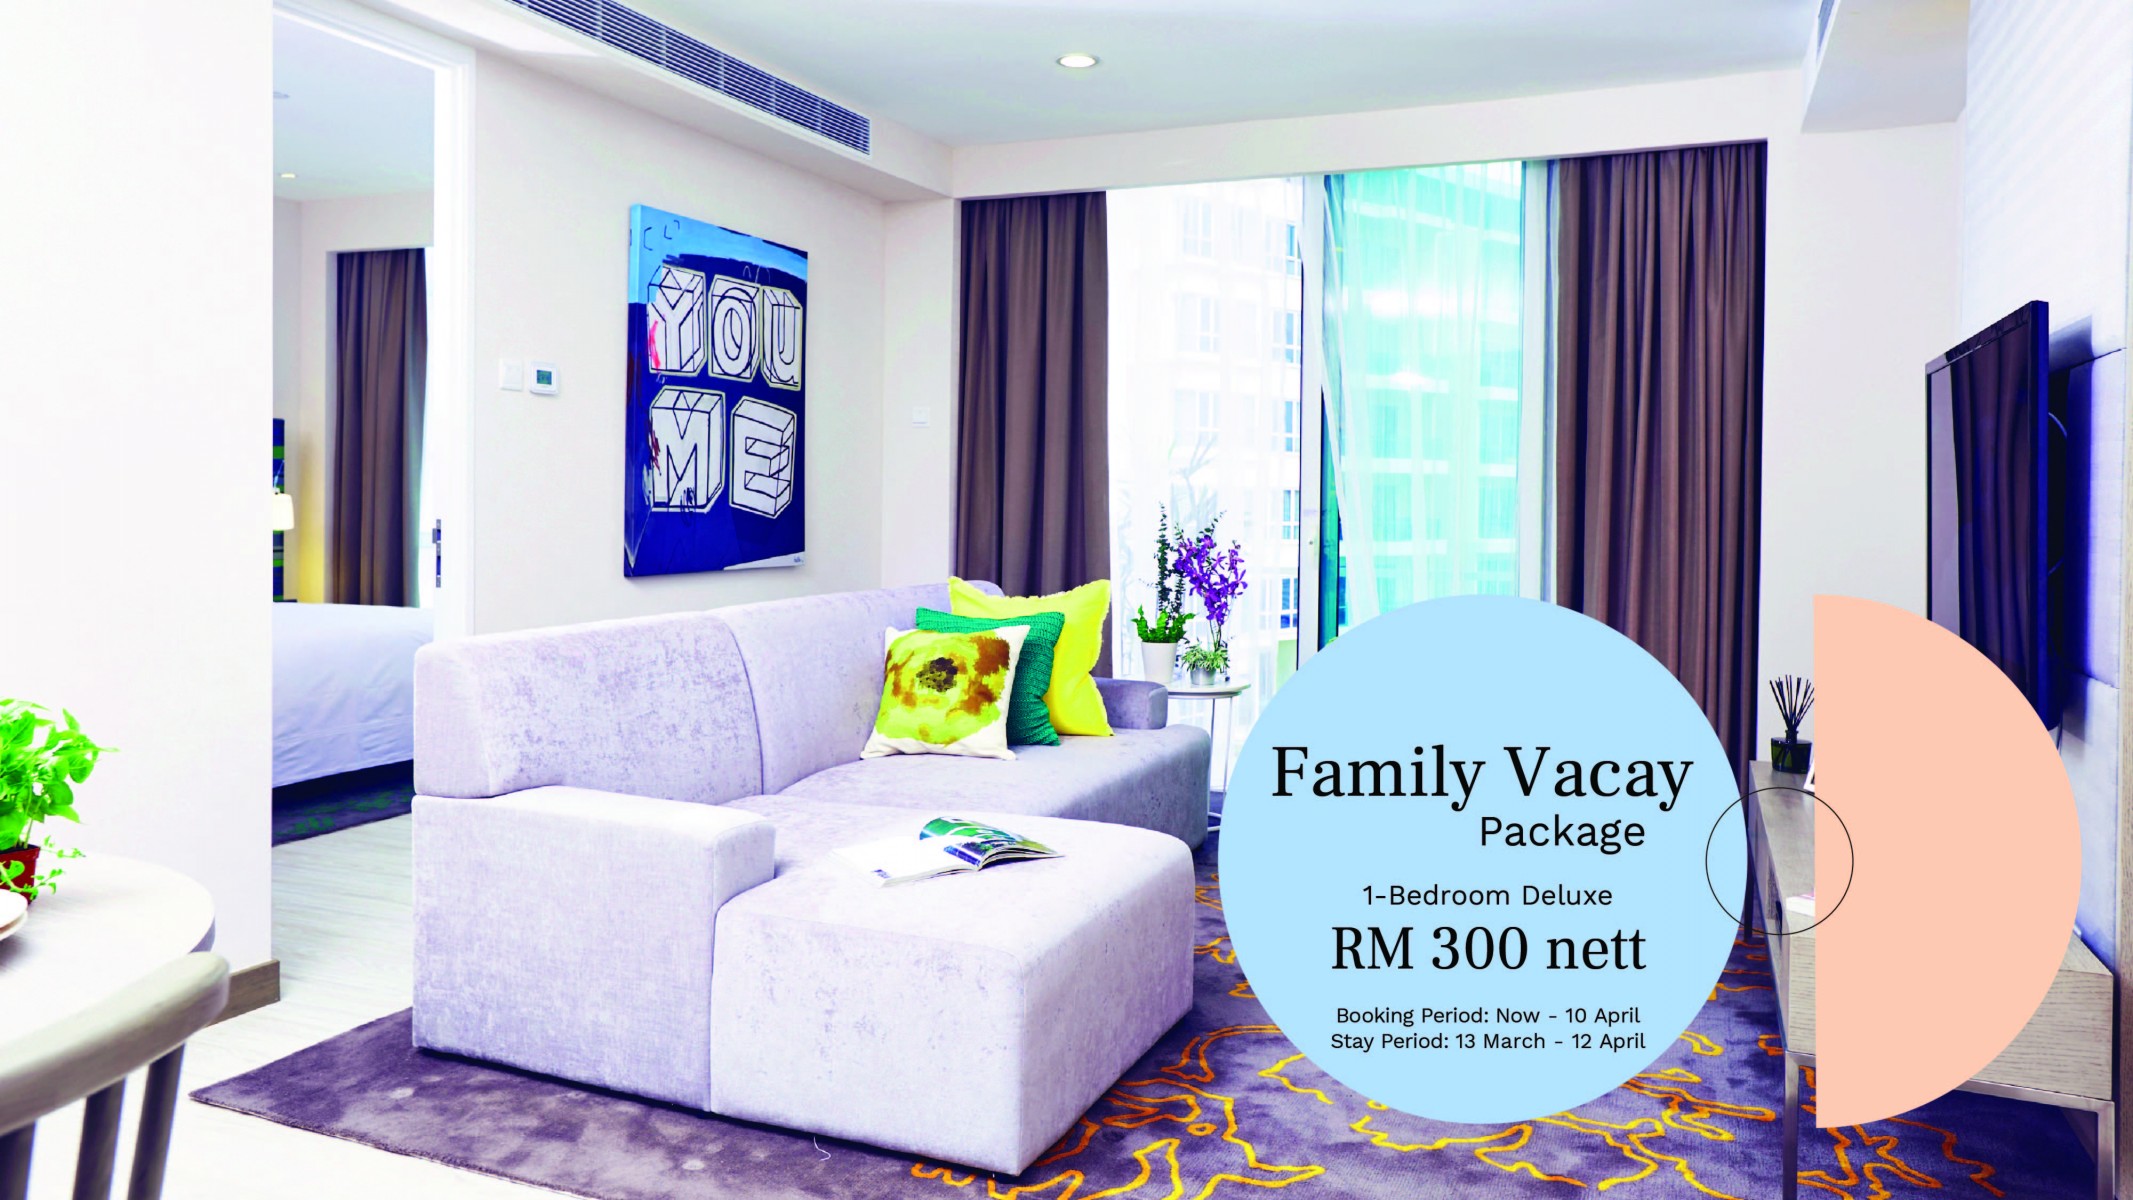 Invito Hotel in Bangsar South Kuala Lumpur offers